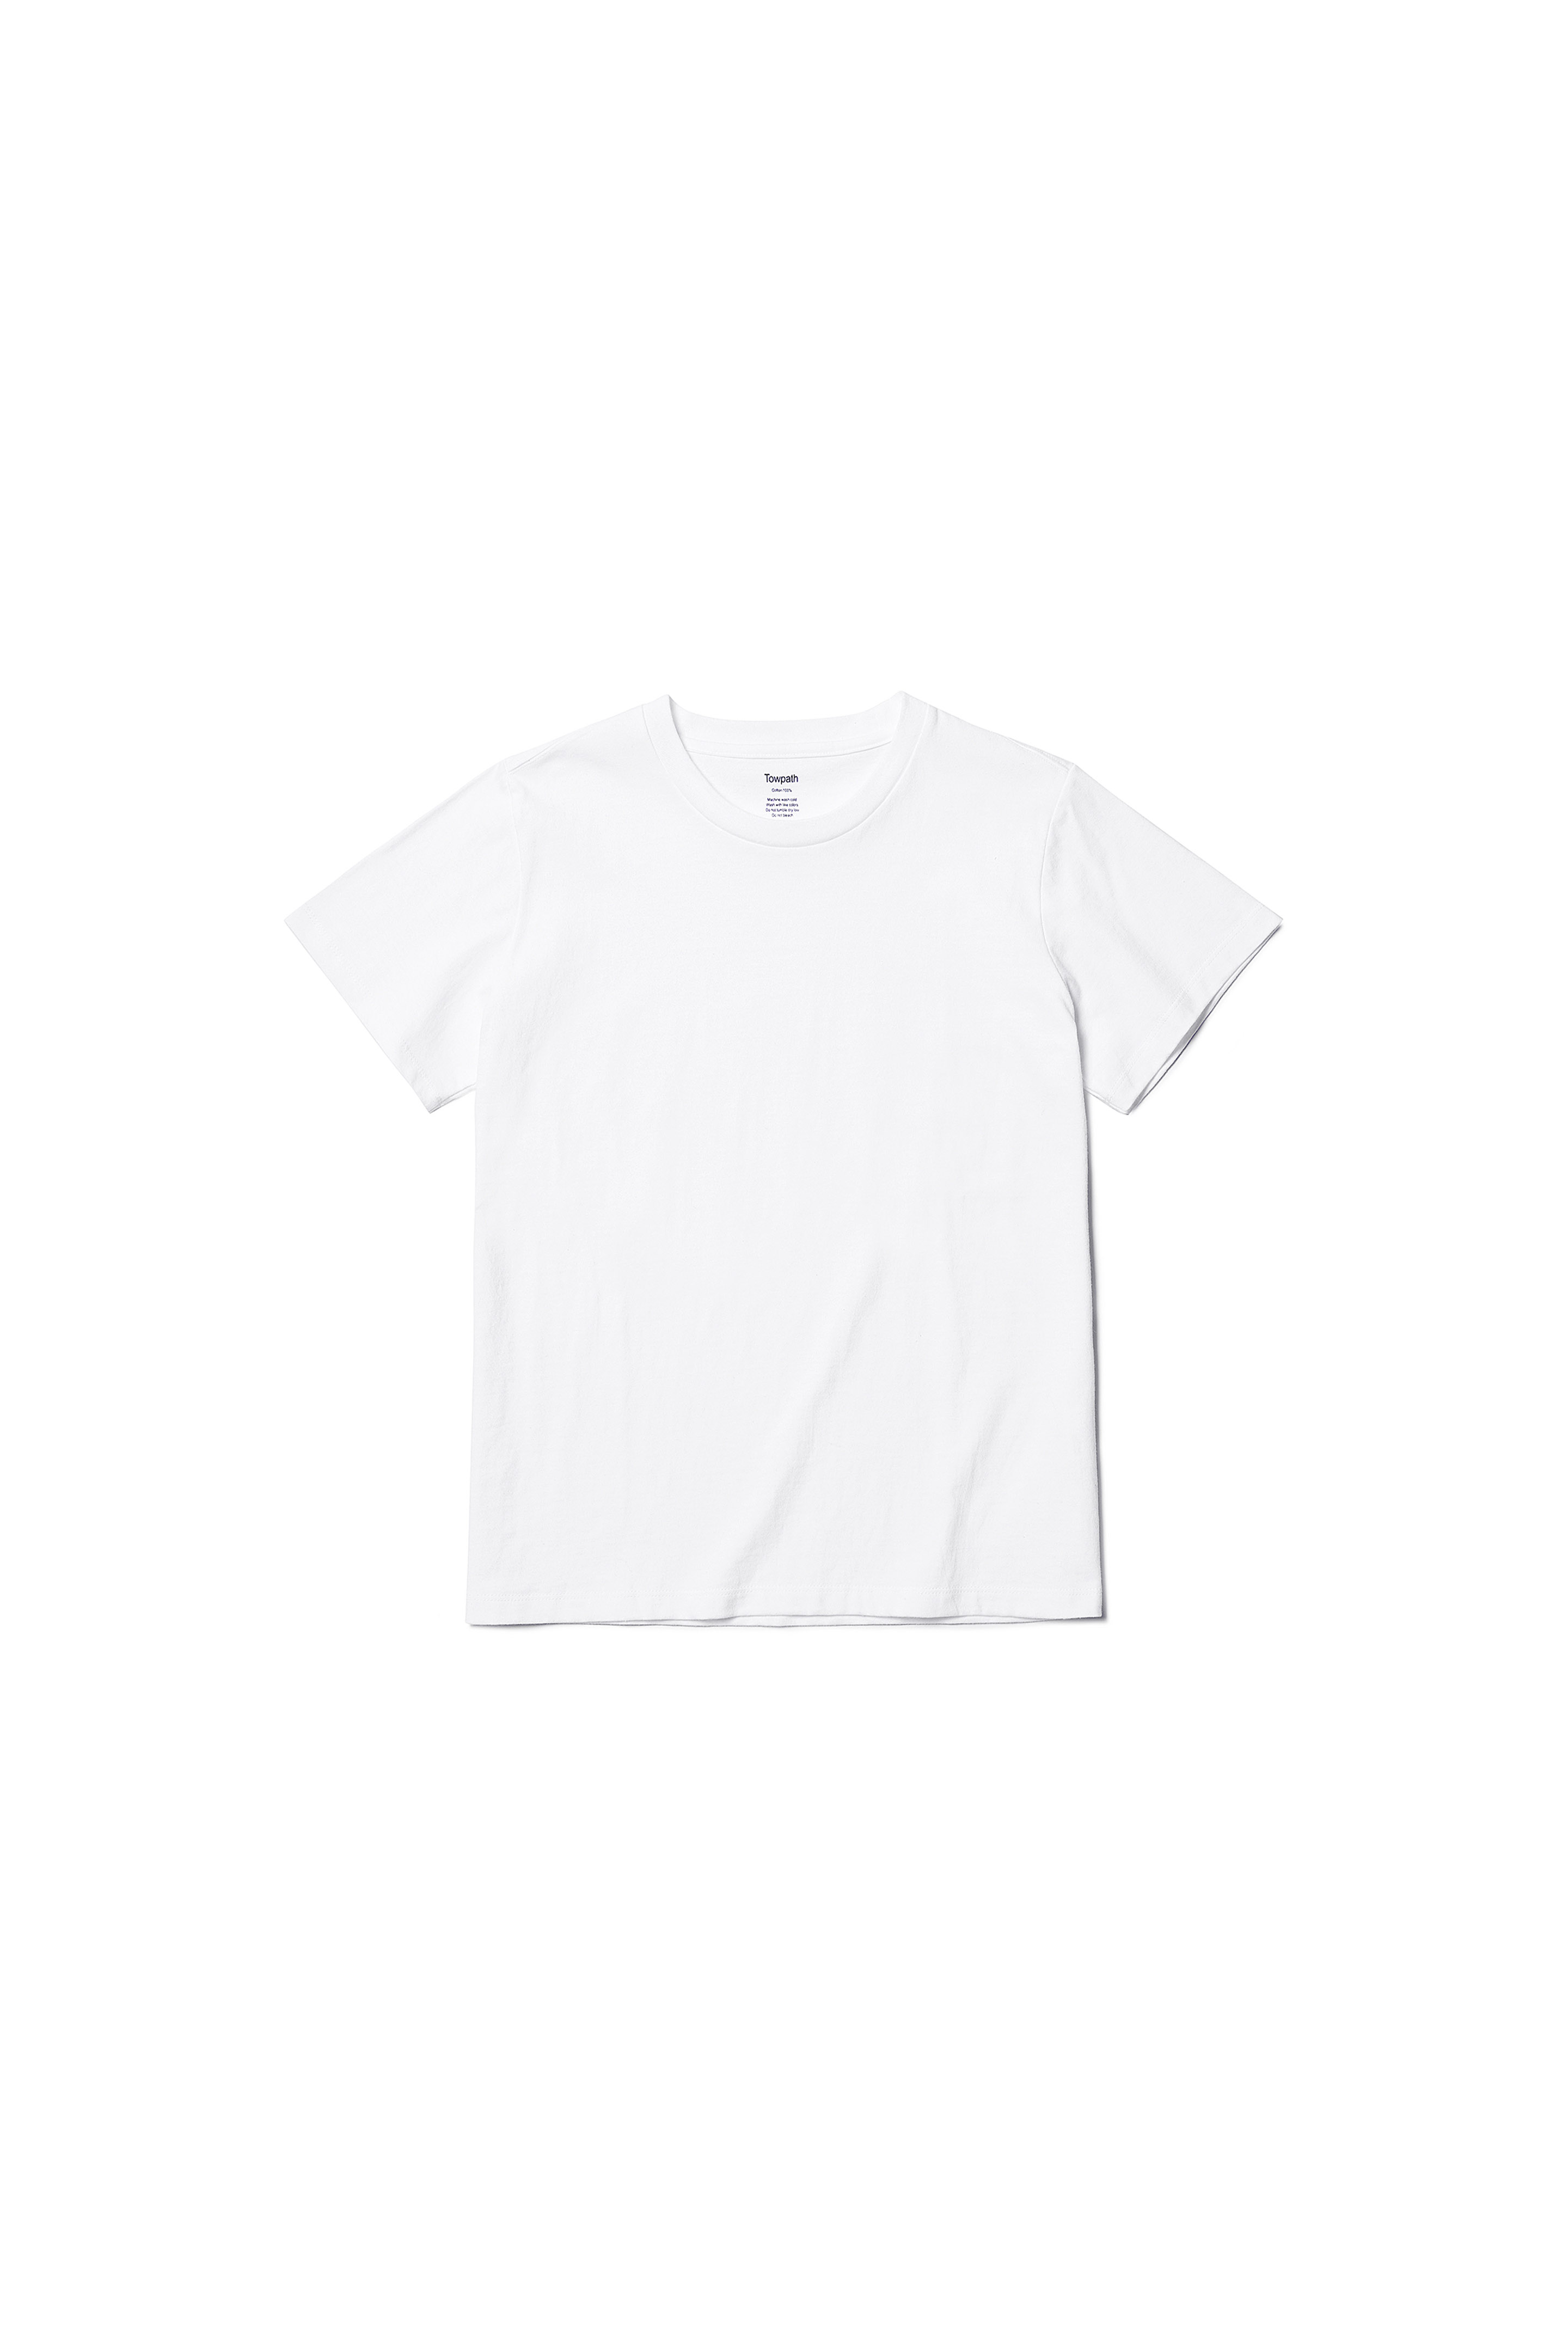 Towpath 002 Crew-neck T-shirt (White)